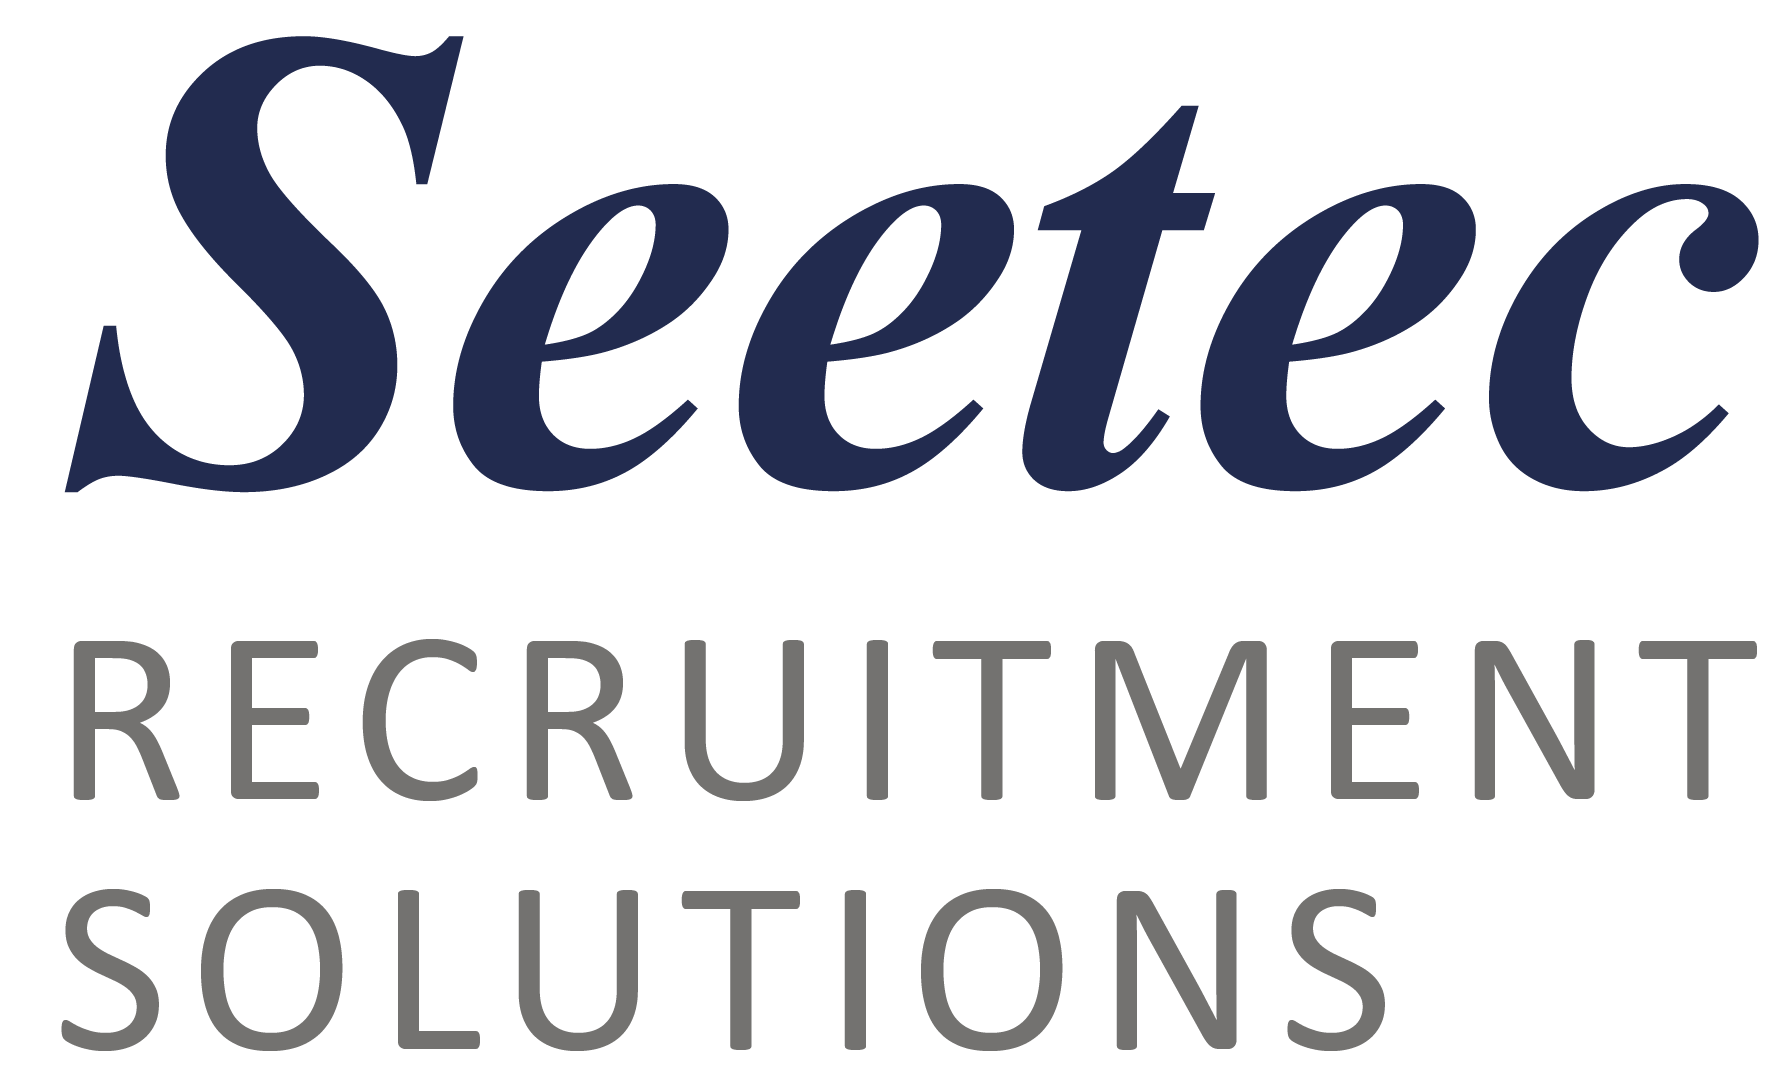 Seetec Recruitment Solutions Logo